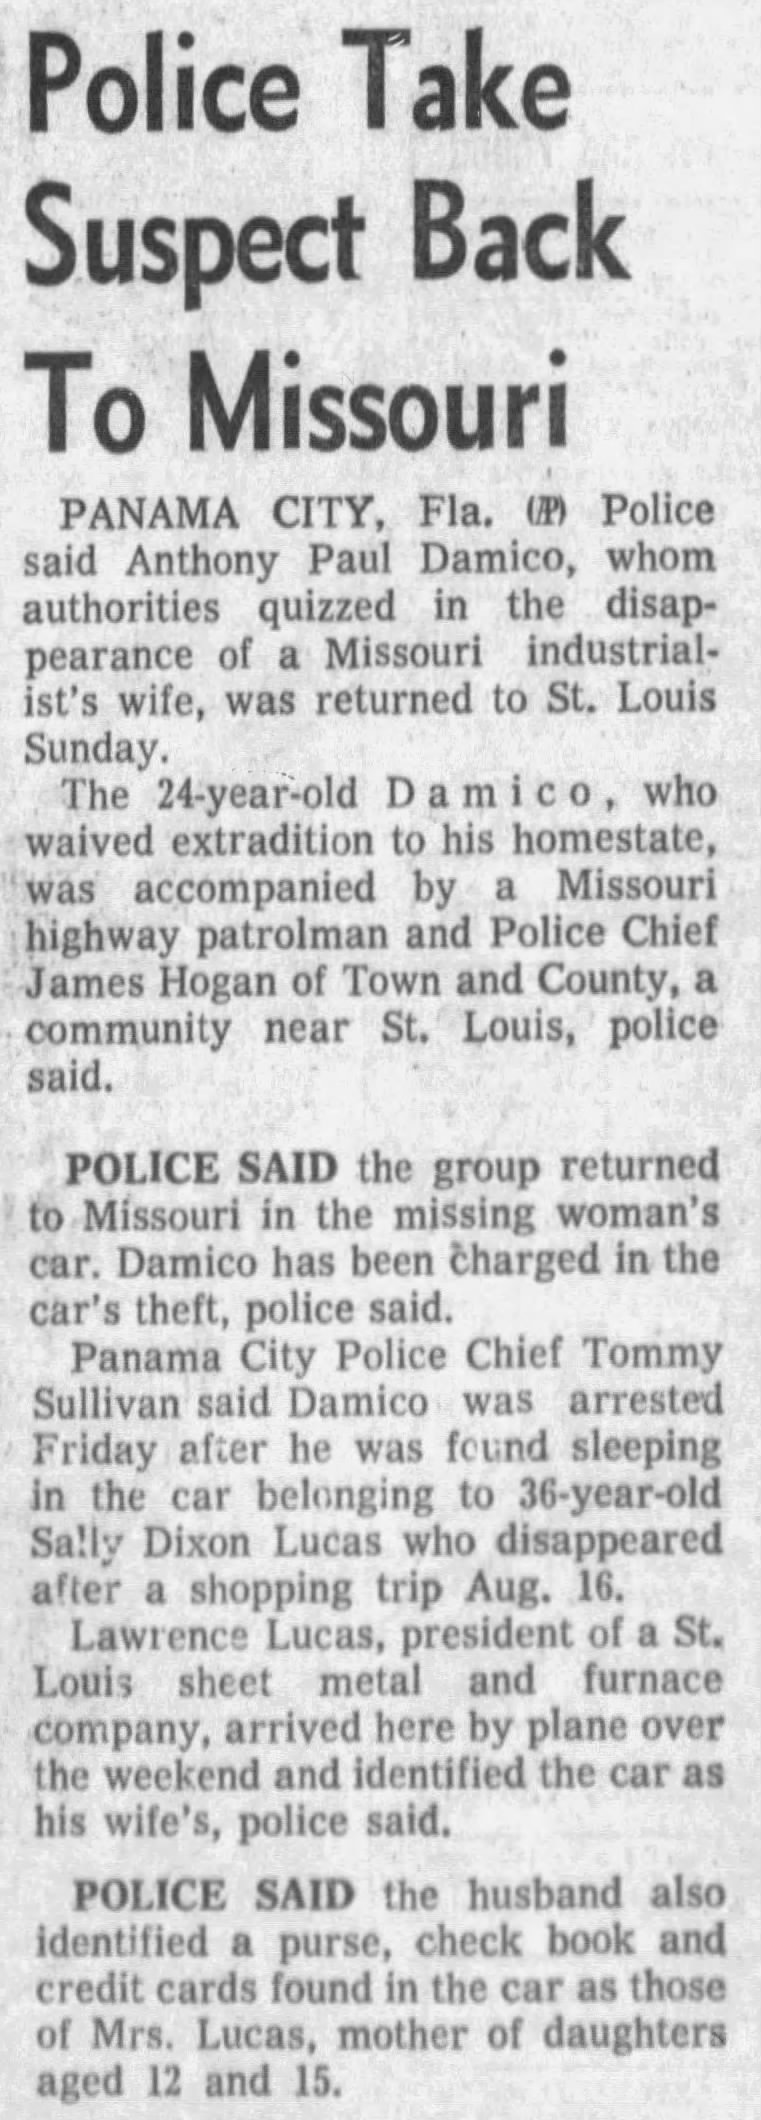 Police Take Anthony Paul Damico back to St. Louis, Missouri